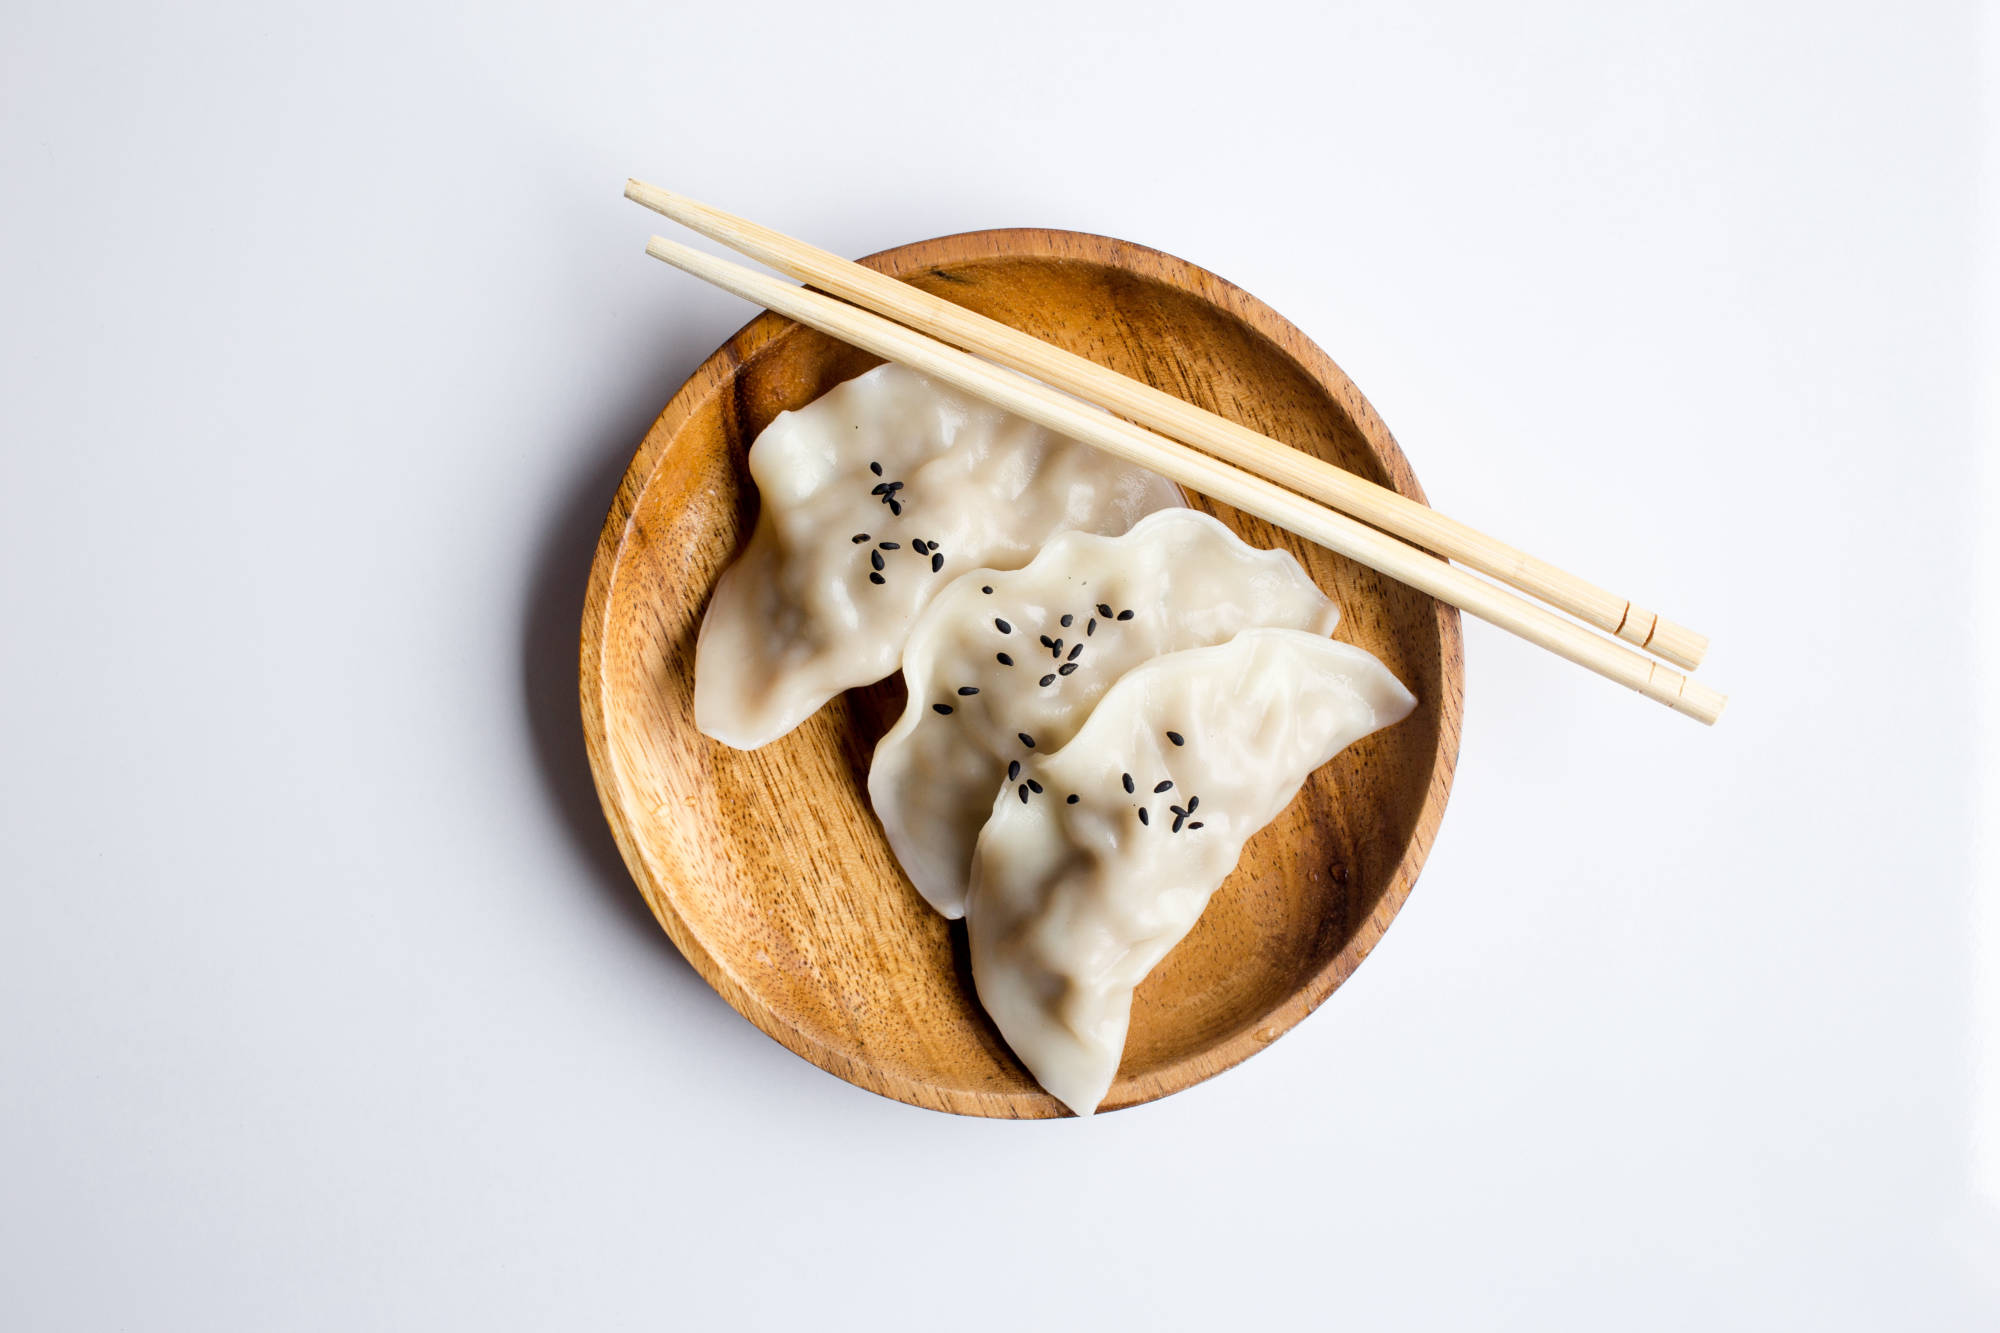 Chinese dumpling recipe for beginners